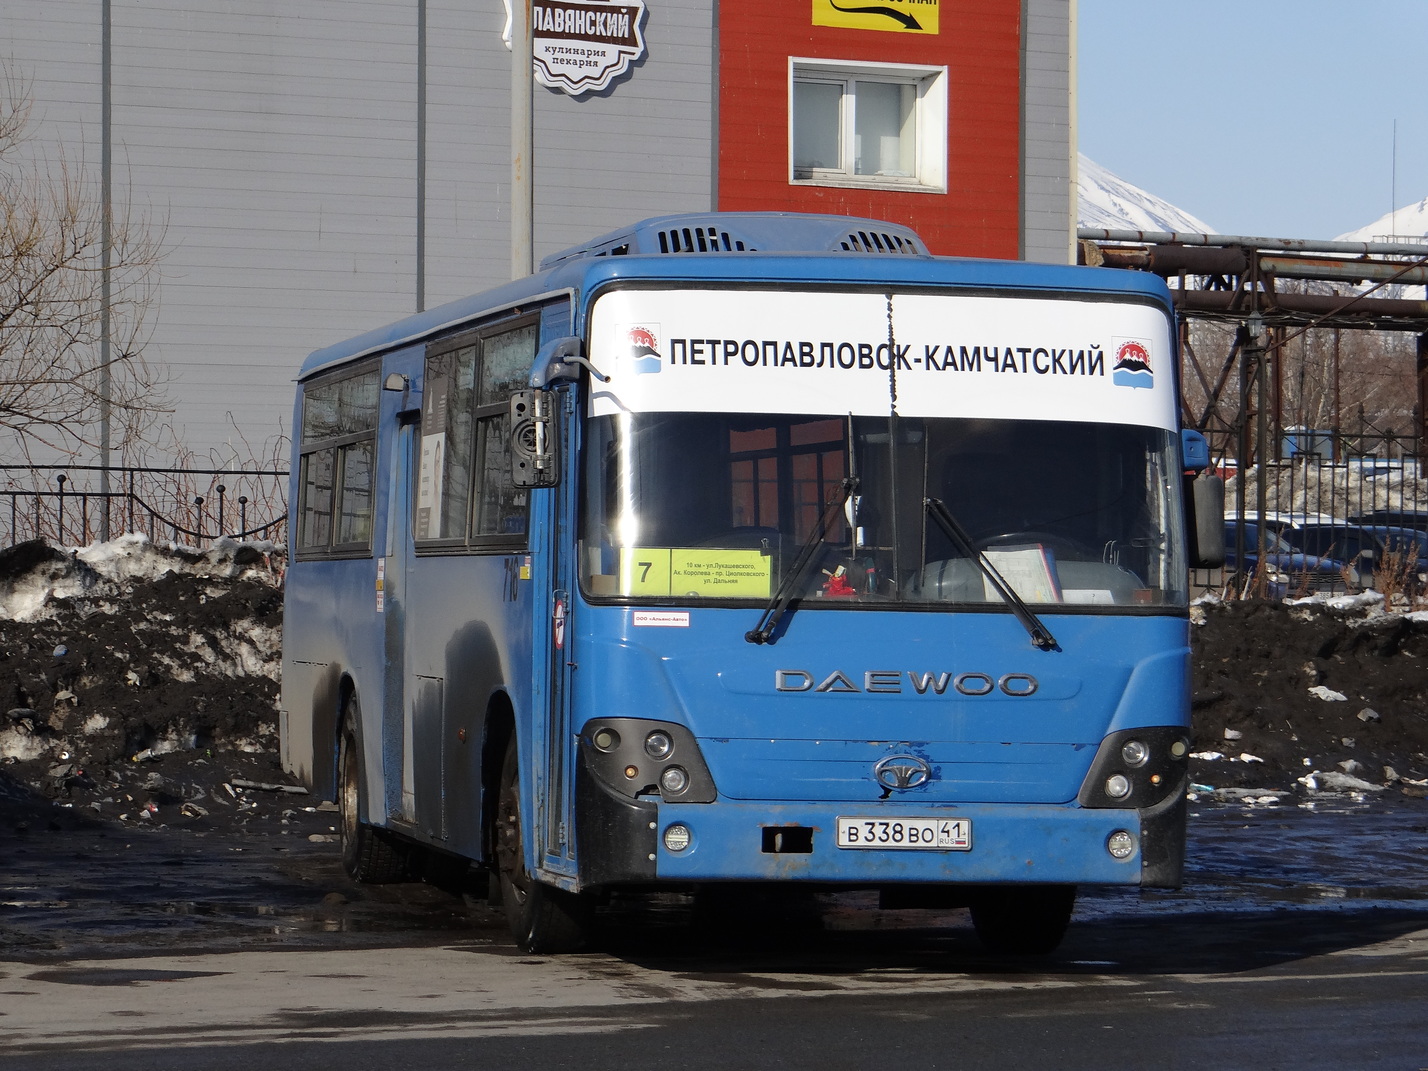 Petropavlovsk-Kamchatskiy, Daewoo BS106 # 716